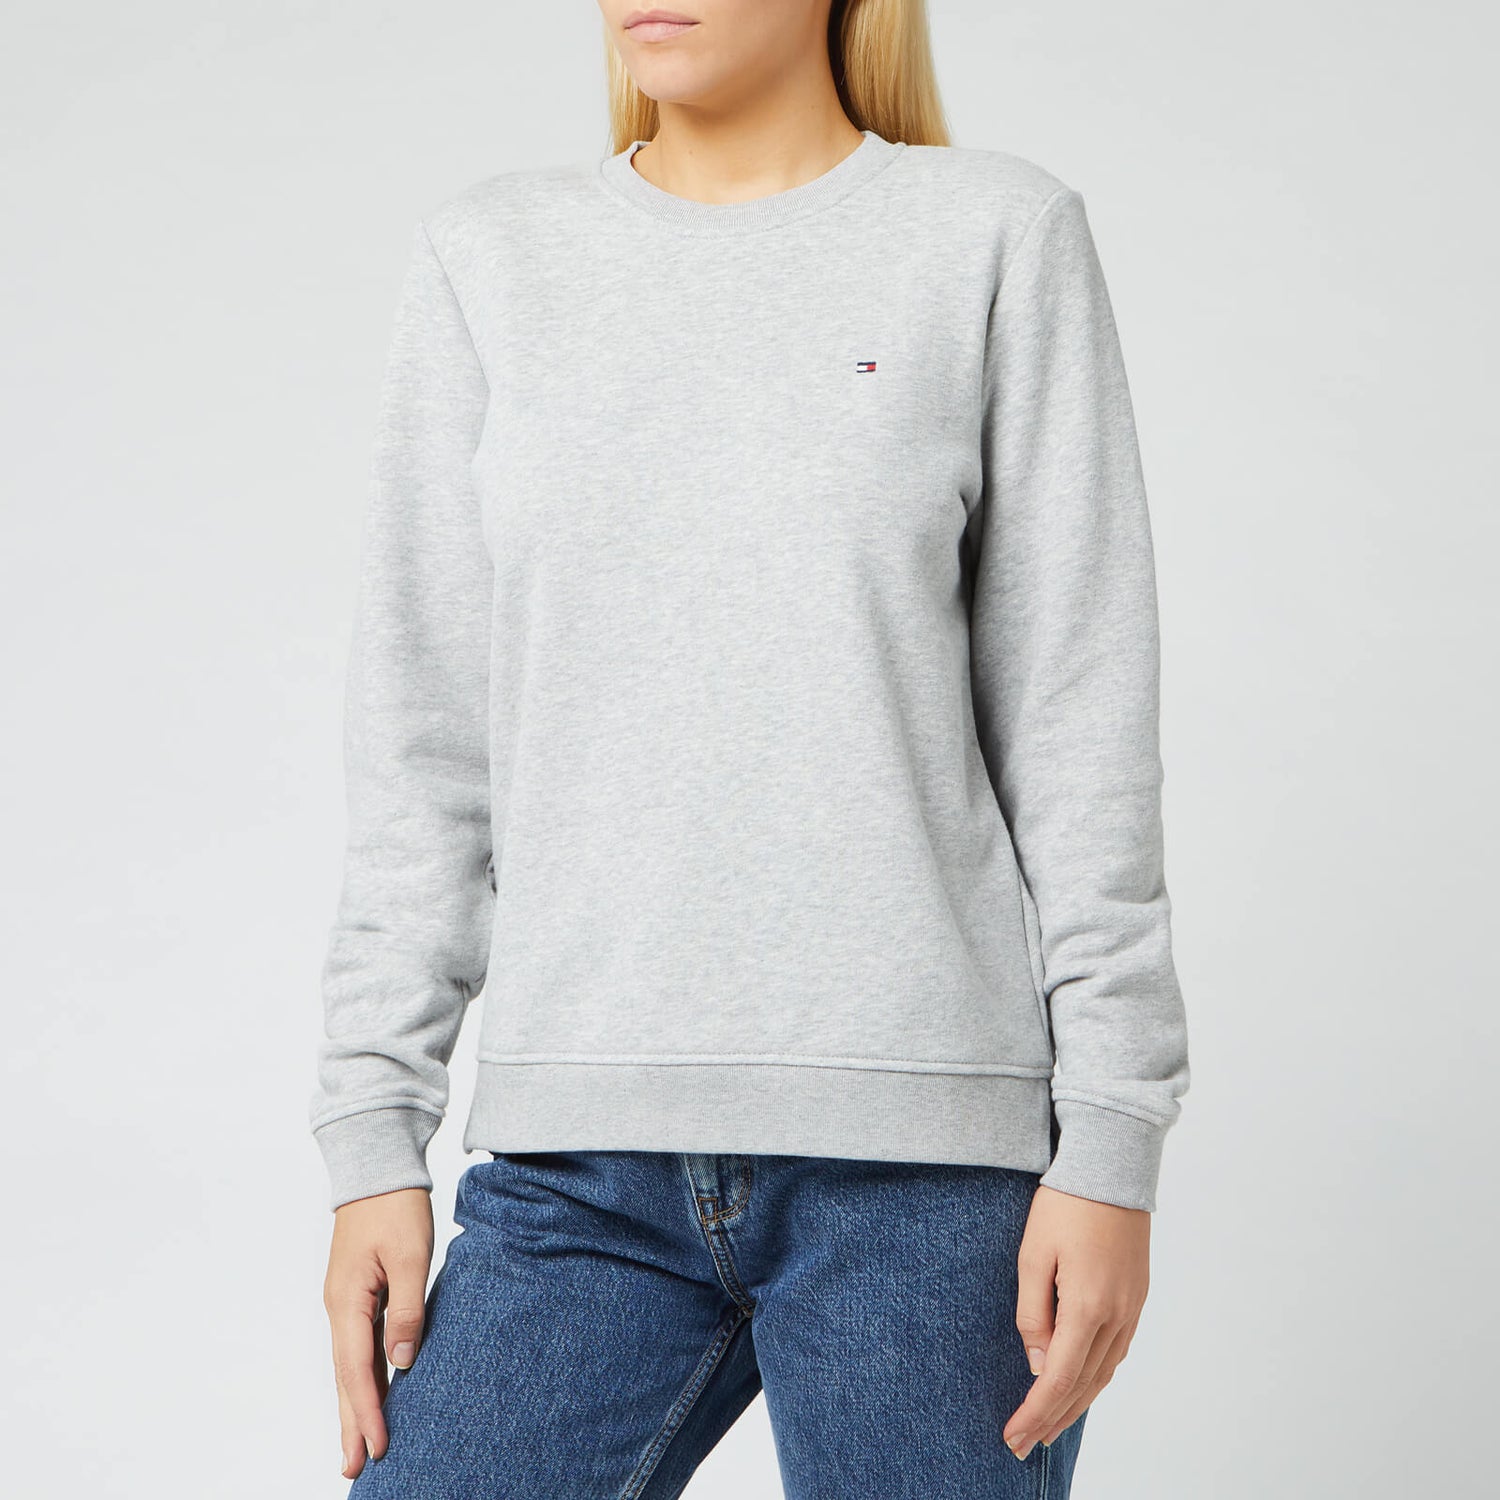 Tommy Hilfiger Women's Heritage Crew Neck Sweatshirt - Light Grey ...